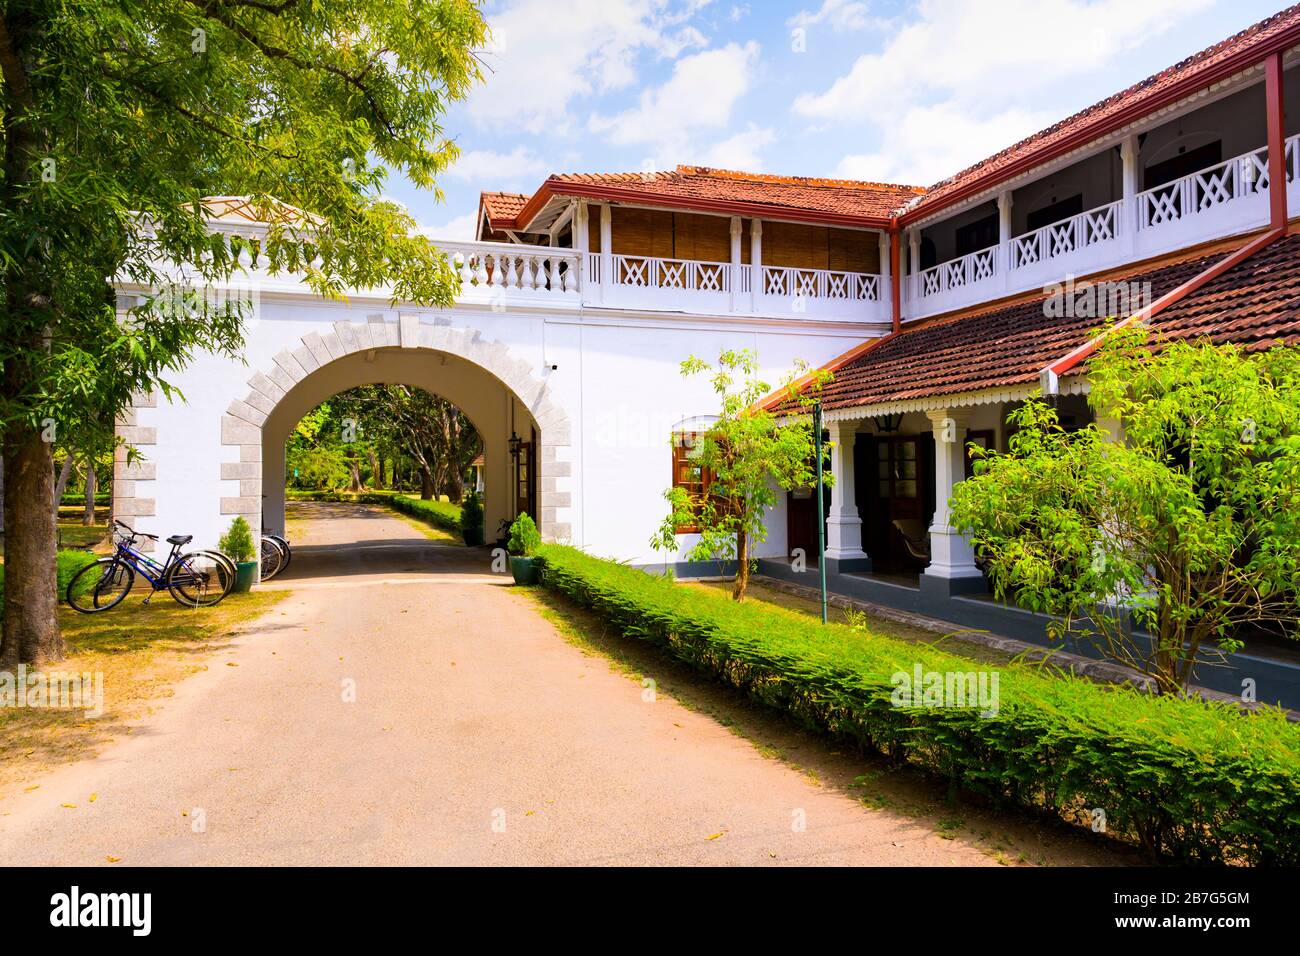 Sri Lanka Ceylon Cultural Triangle Anuradhapura The Sanctuary at Tissawewa landmark Colonial Hotel set 14 acres entrance garden park drive balcony Stock Photo